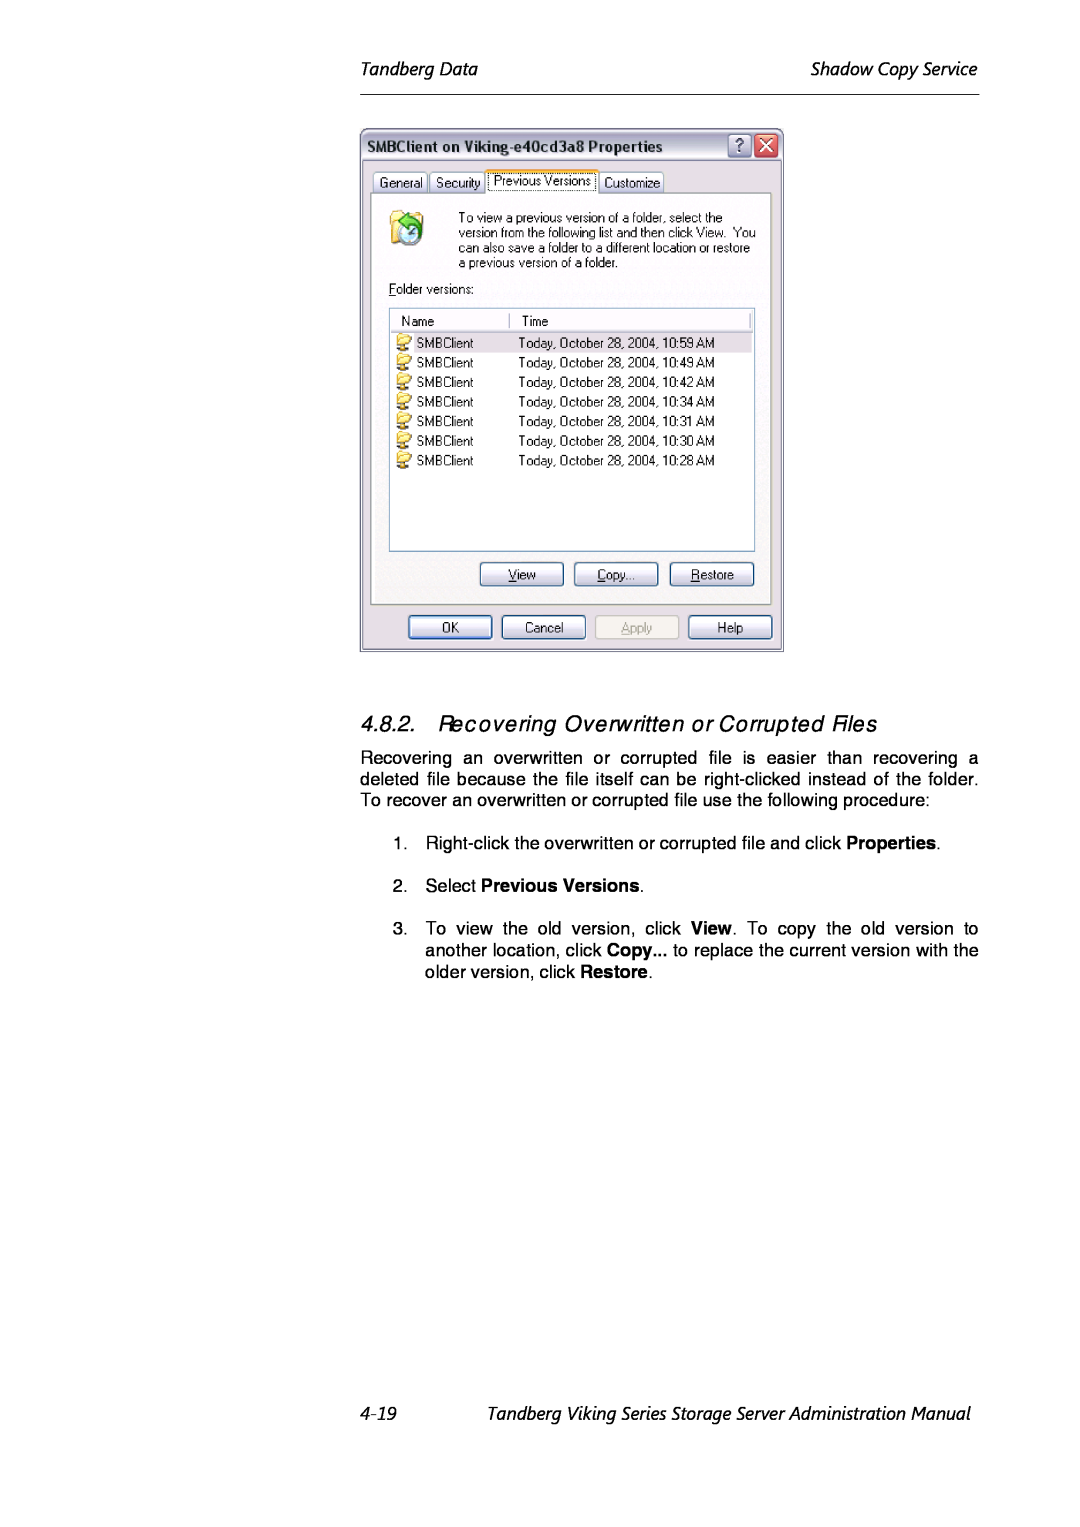 Tandberg Data Viking FS-1600 manual Recovering Overwritten or Corrupted Files, Tandberg DataShadow Copy Service, 4-19 